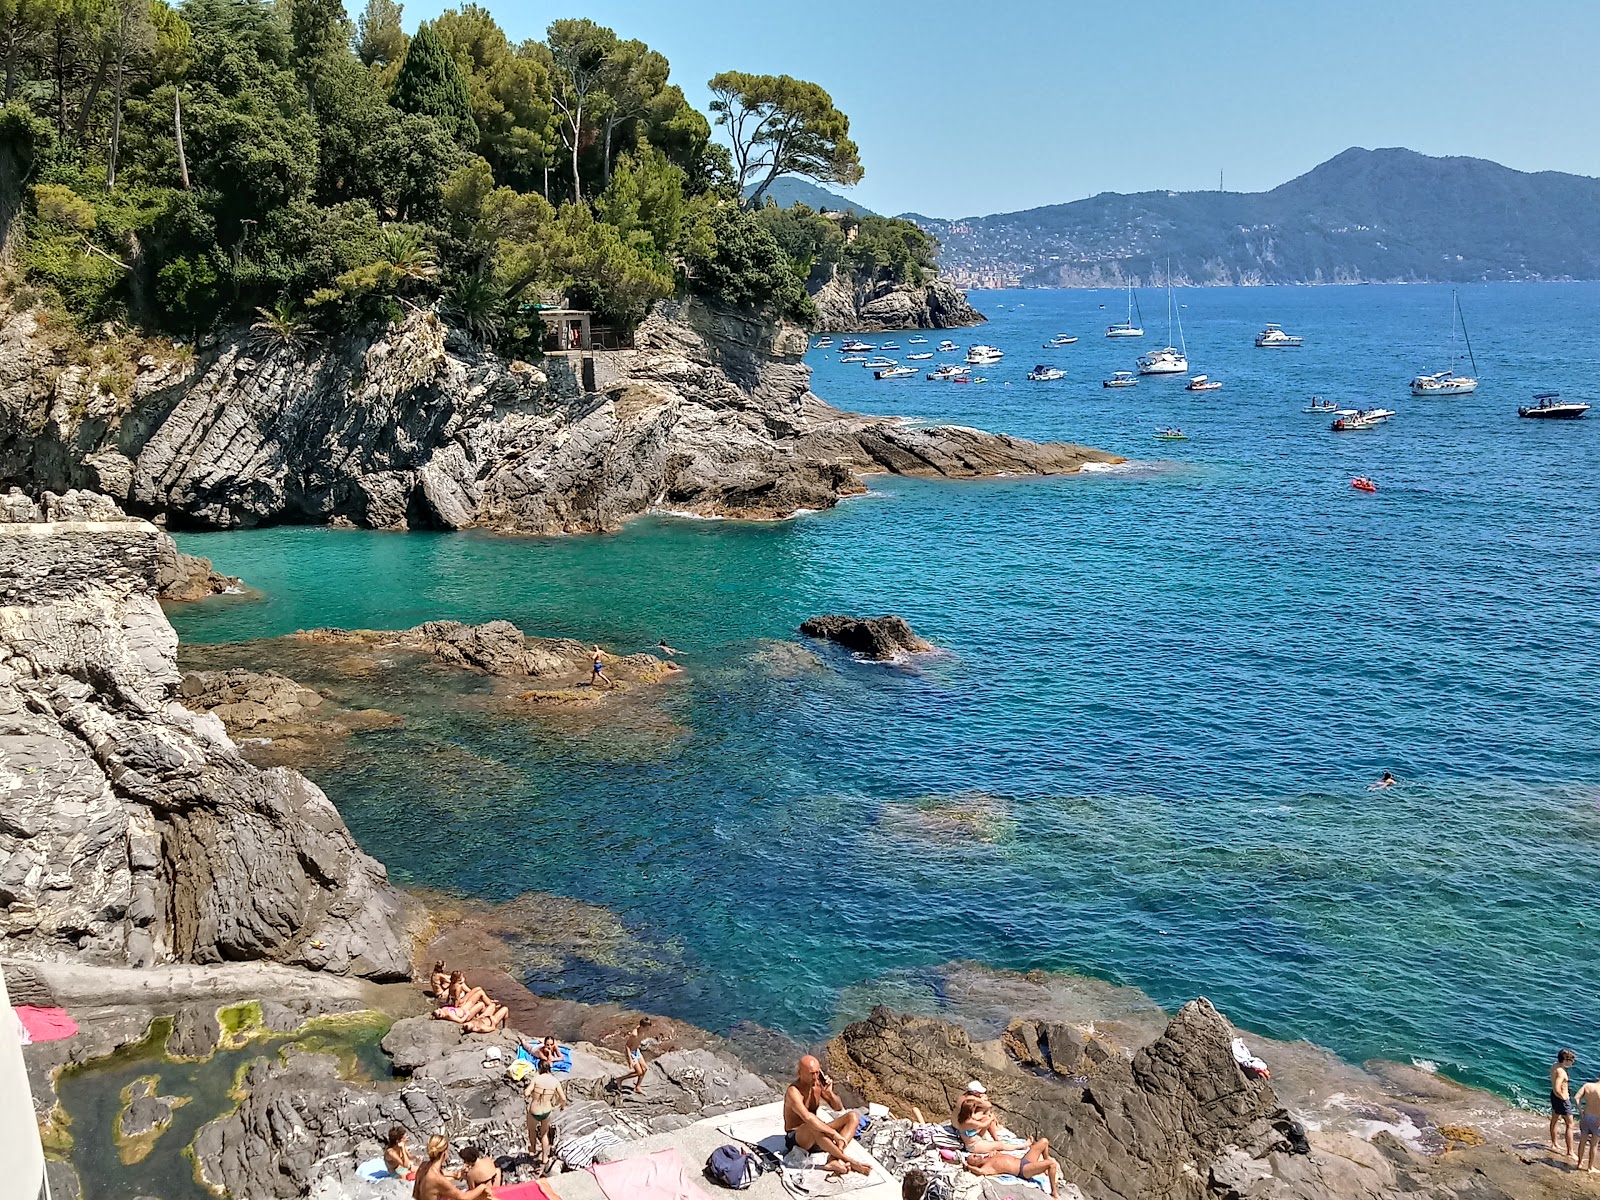 Valokuva Spiaggia Scogliera di Pontettoista. pinnalla kivet:n kanssa